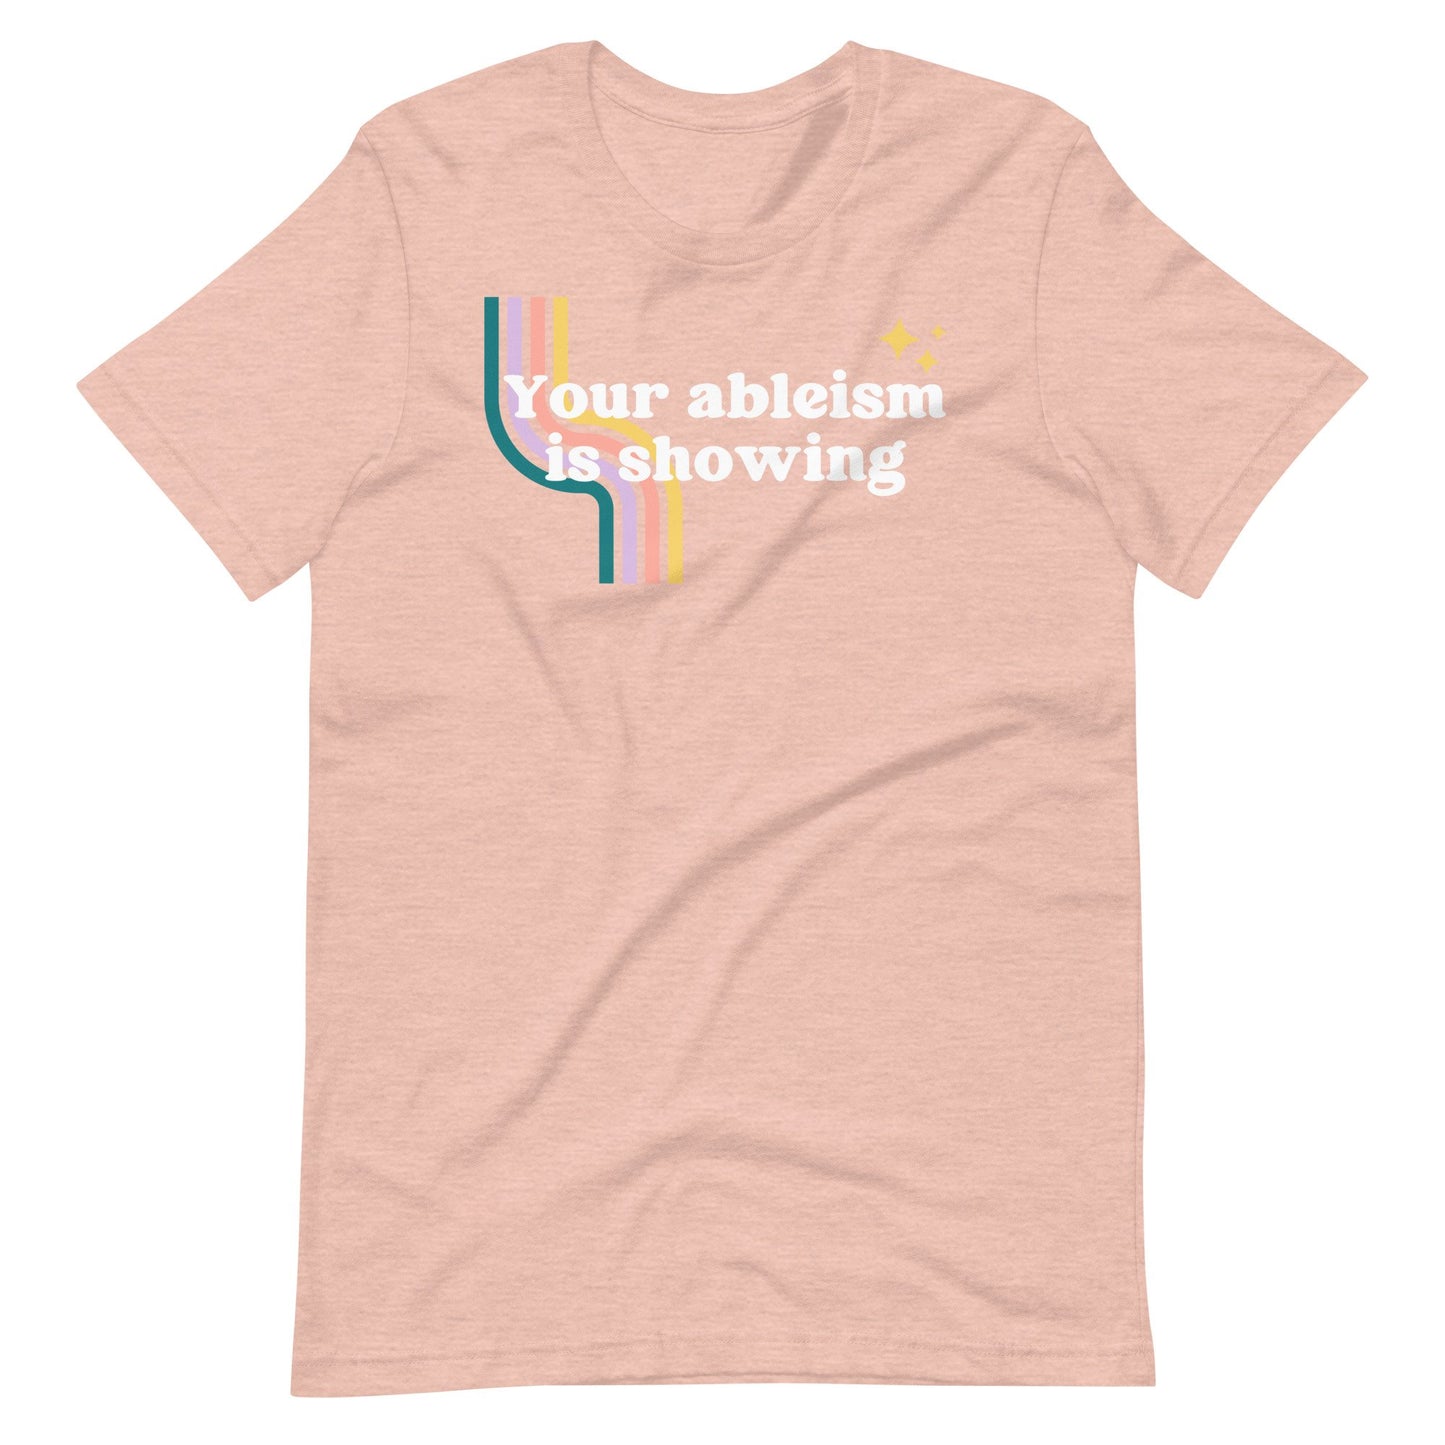 unisex-staple-t-shirt-heather-prism-peach-front-62bc81f4b9a37.jpg